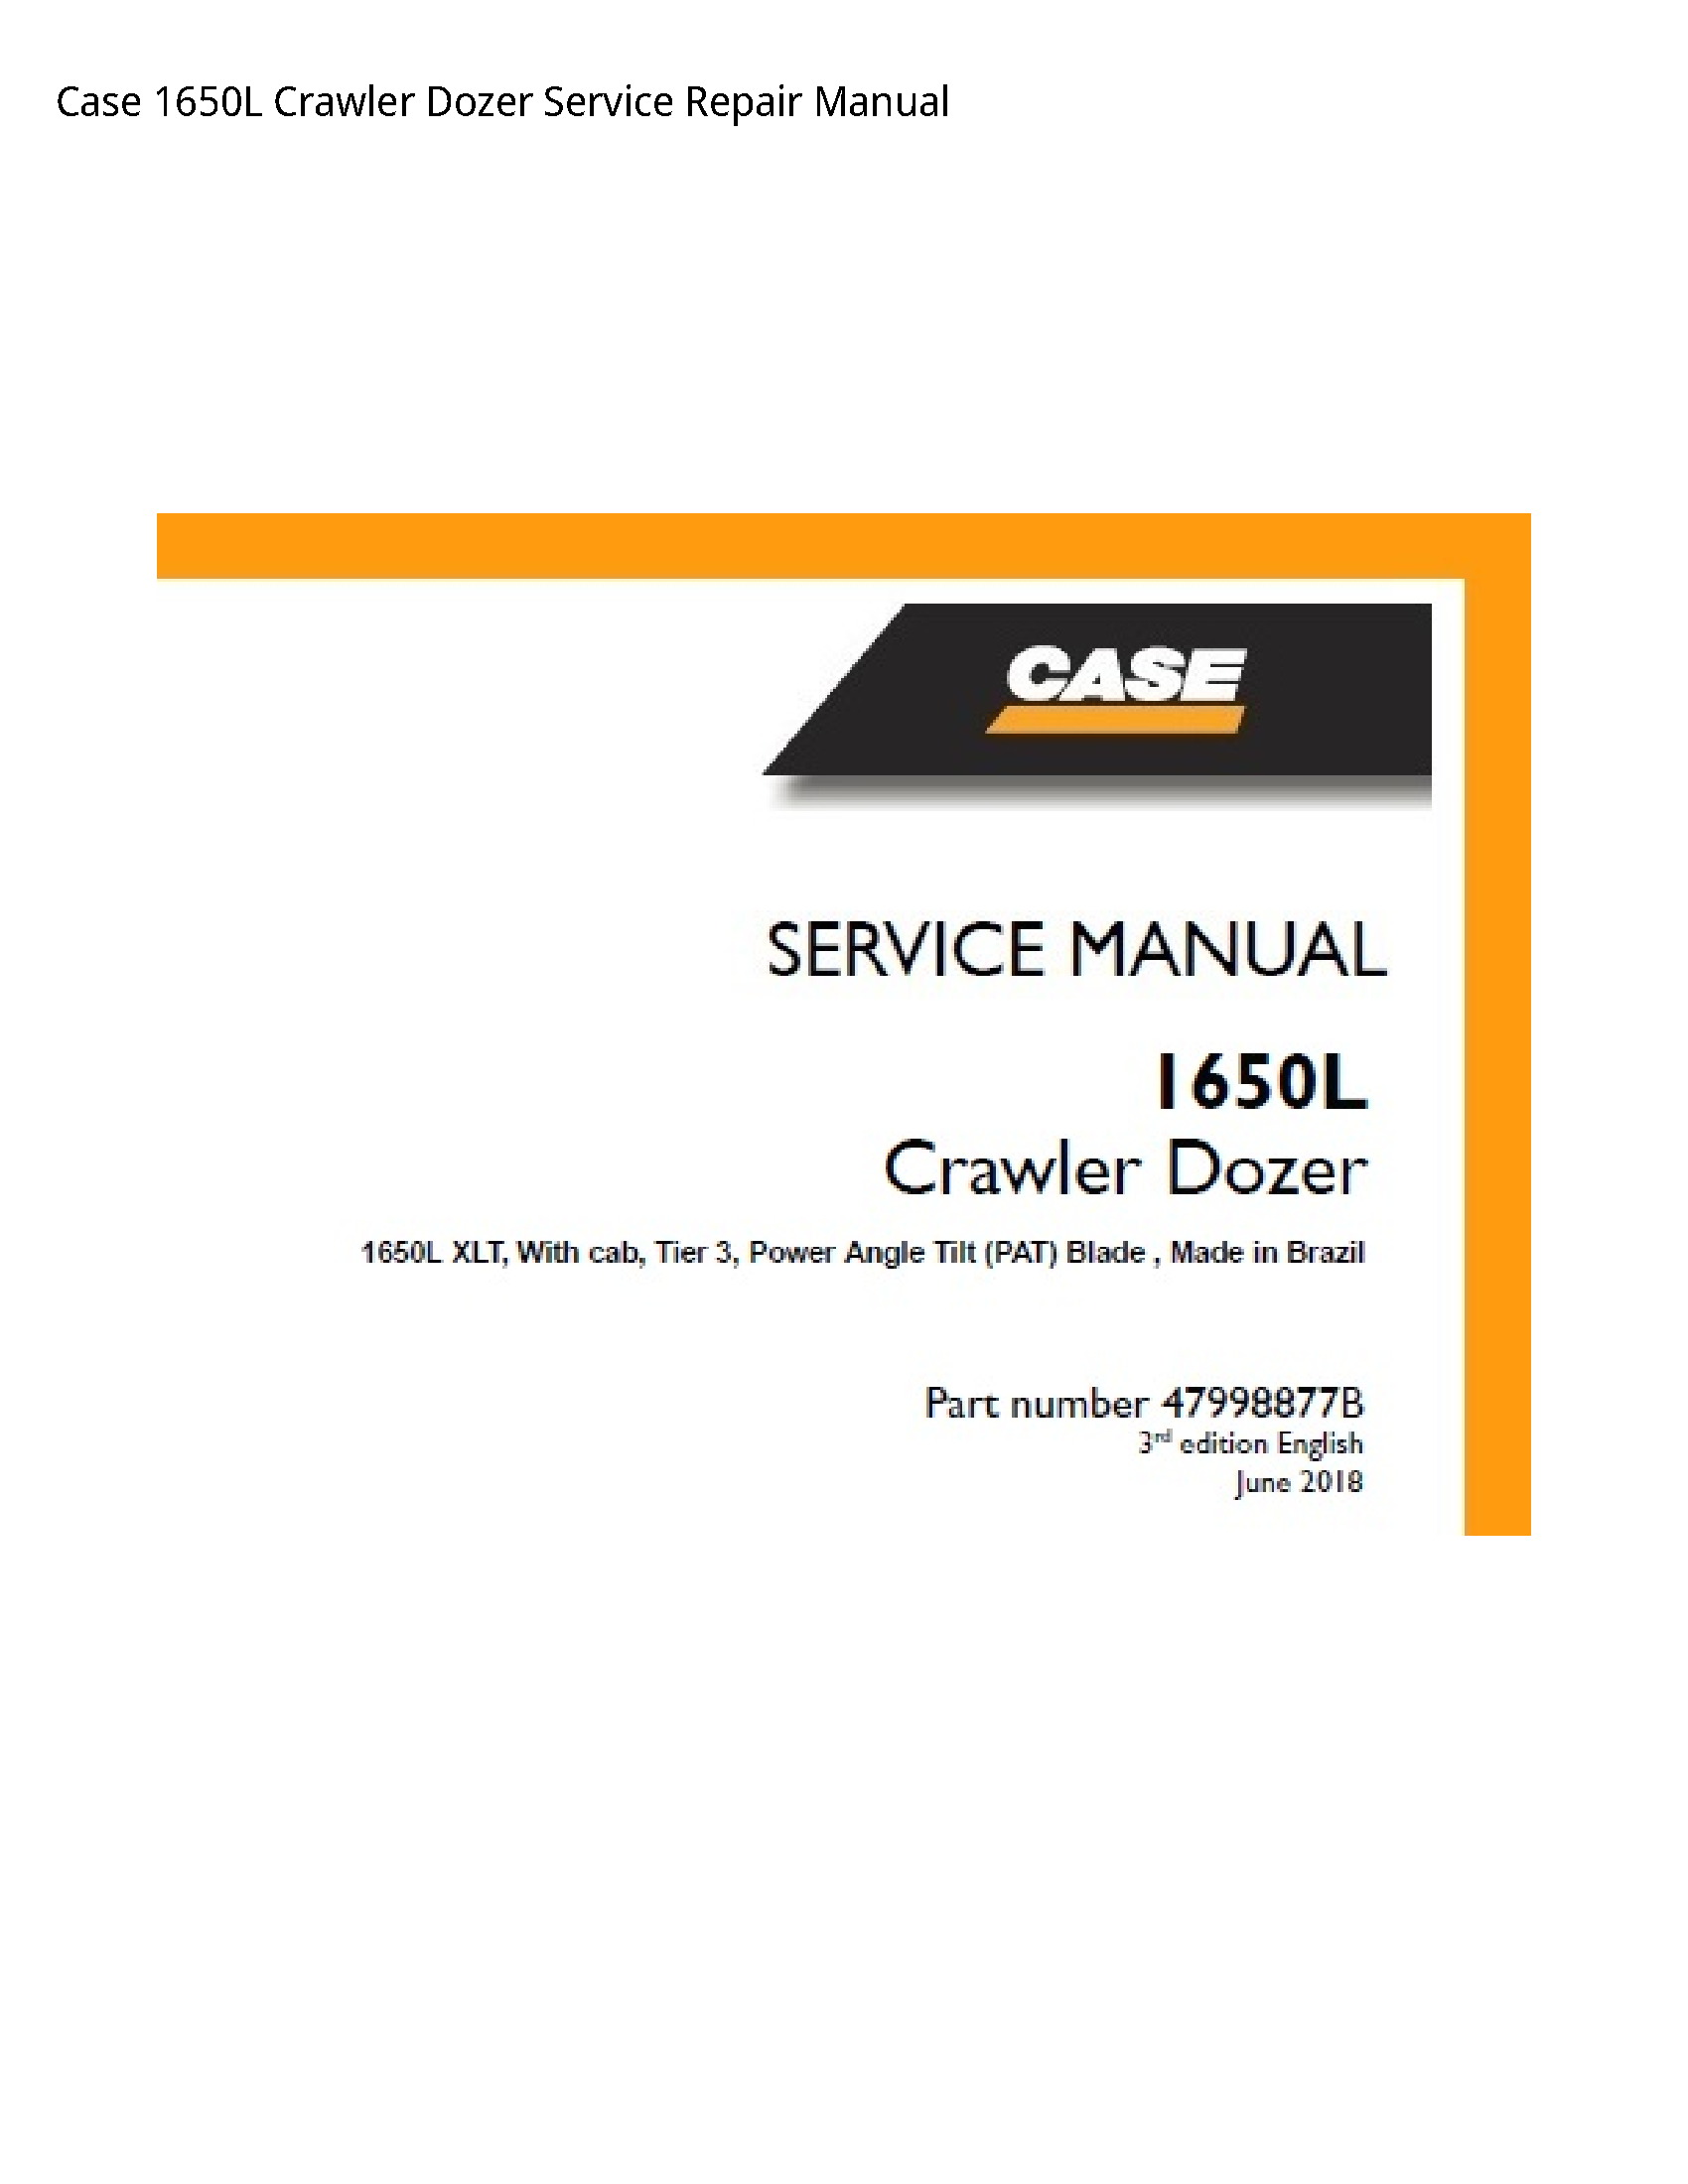 Case/Case IH 1650L Crawler Dozer manual